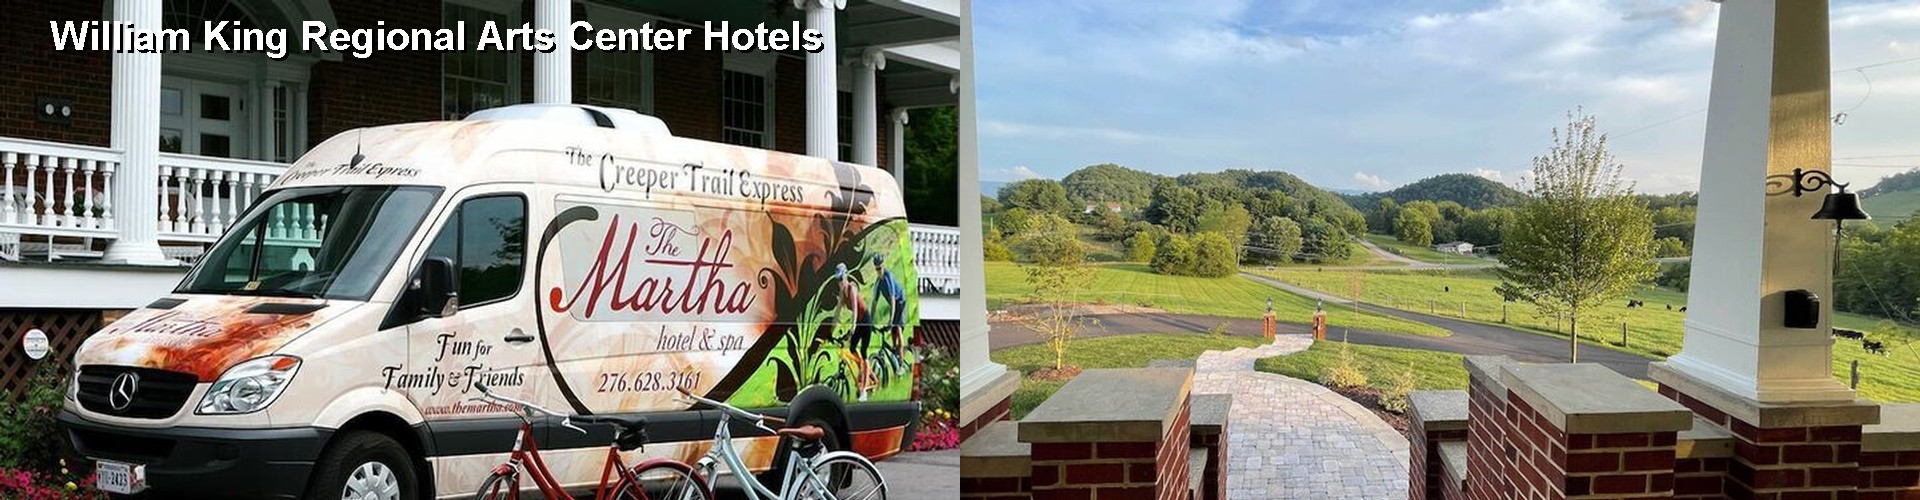 5 Best Hotels near William King Regional Arts Center